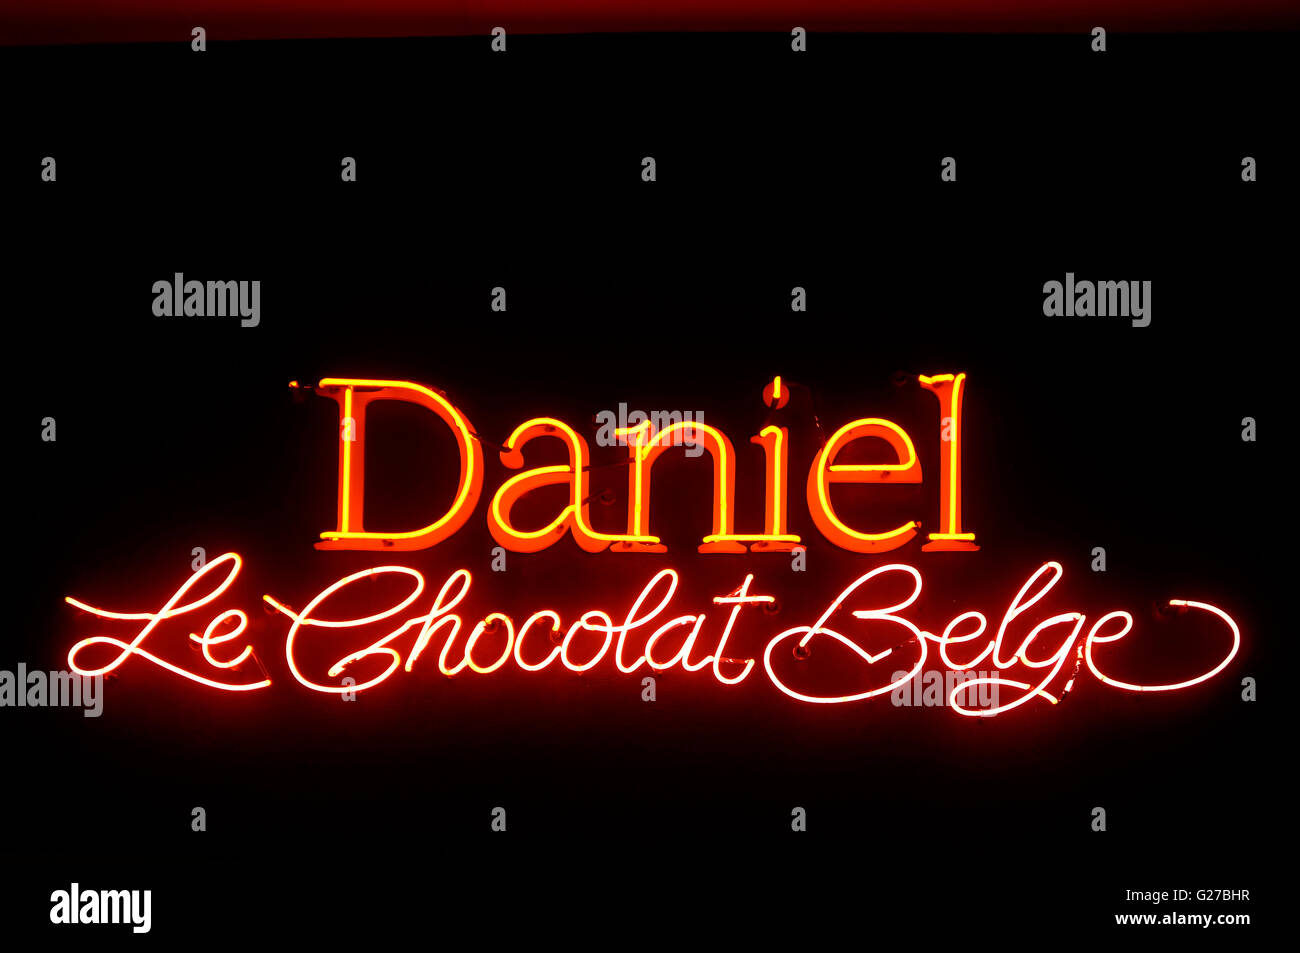 Daniel Chocolat Belge neon sign at night, Vancouver, Canada Stock Photo